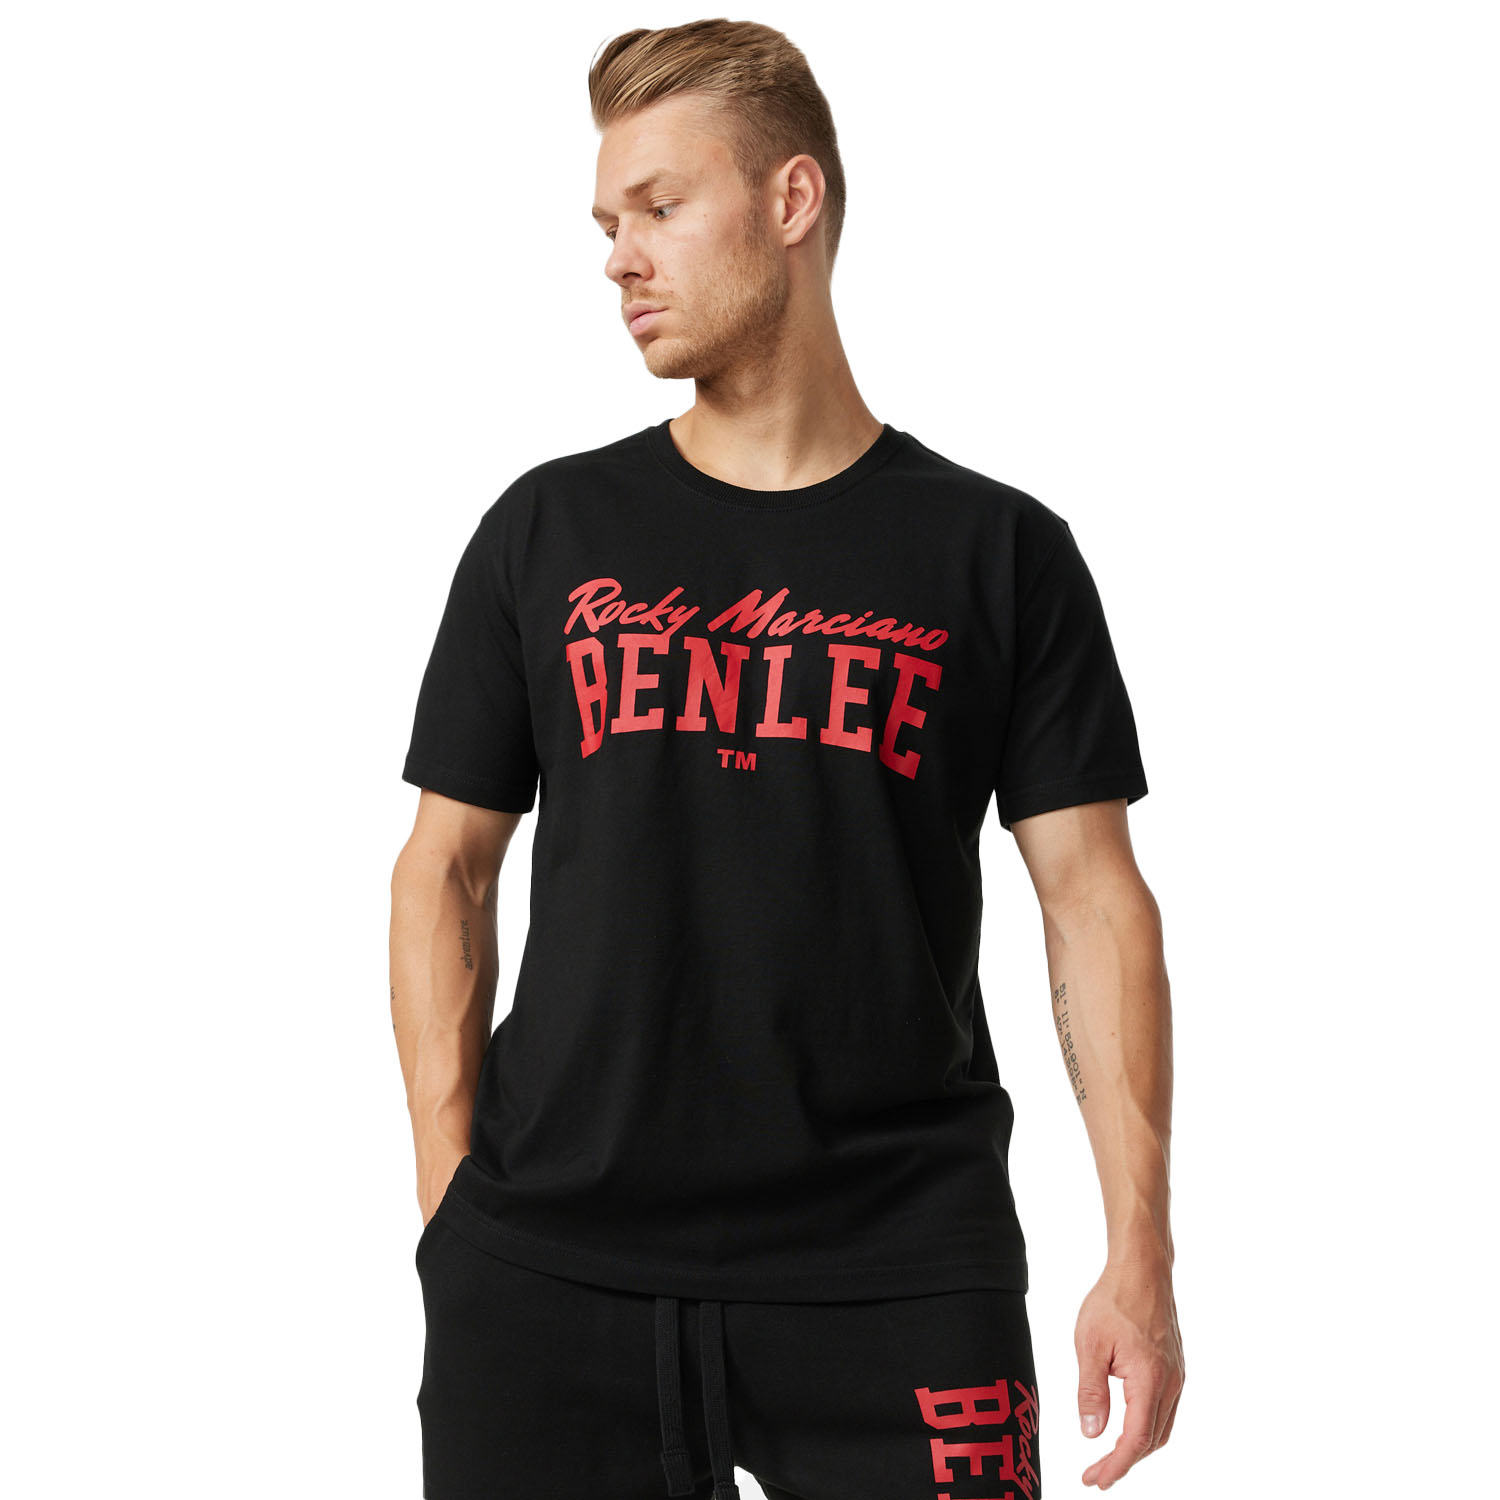 BENLEE T-Shirt, Donley, black, S